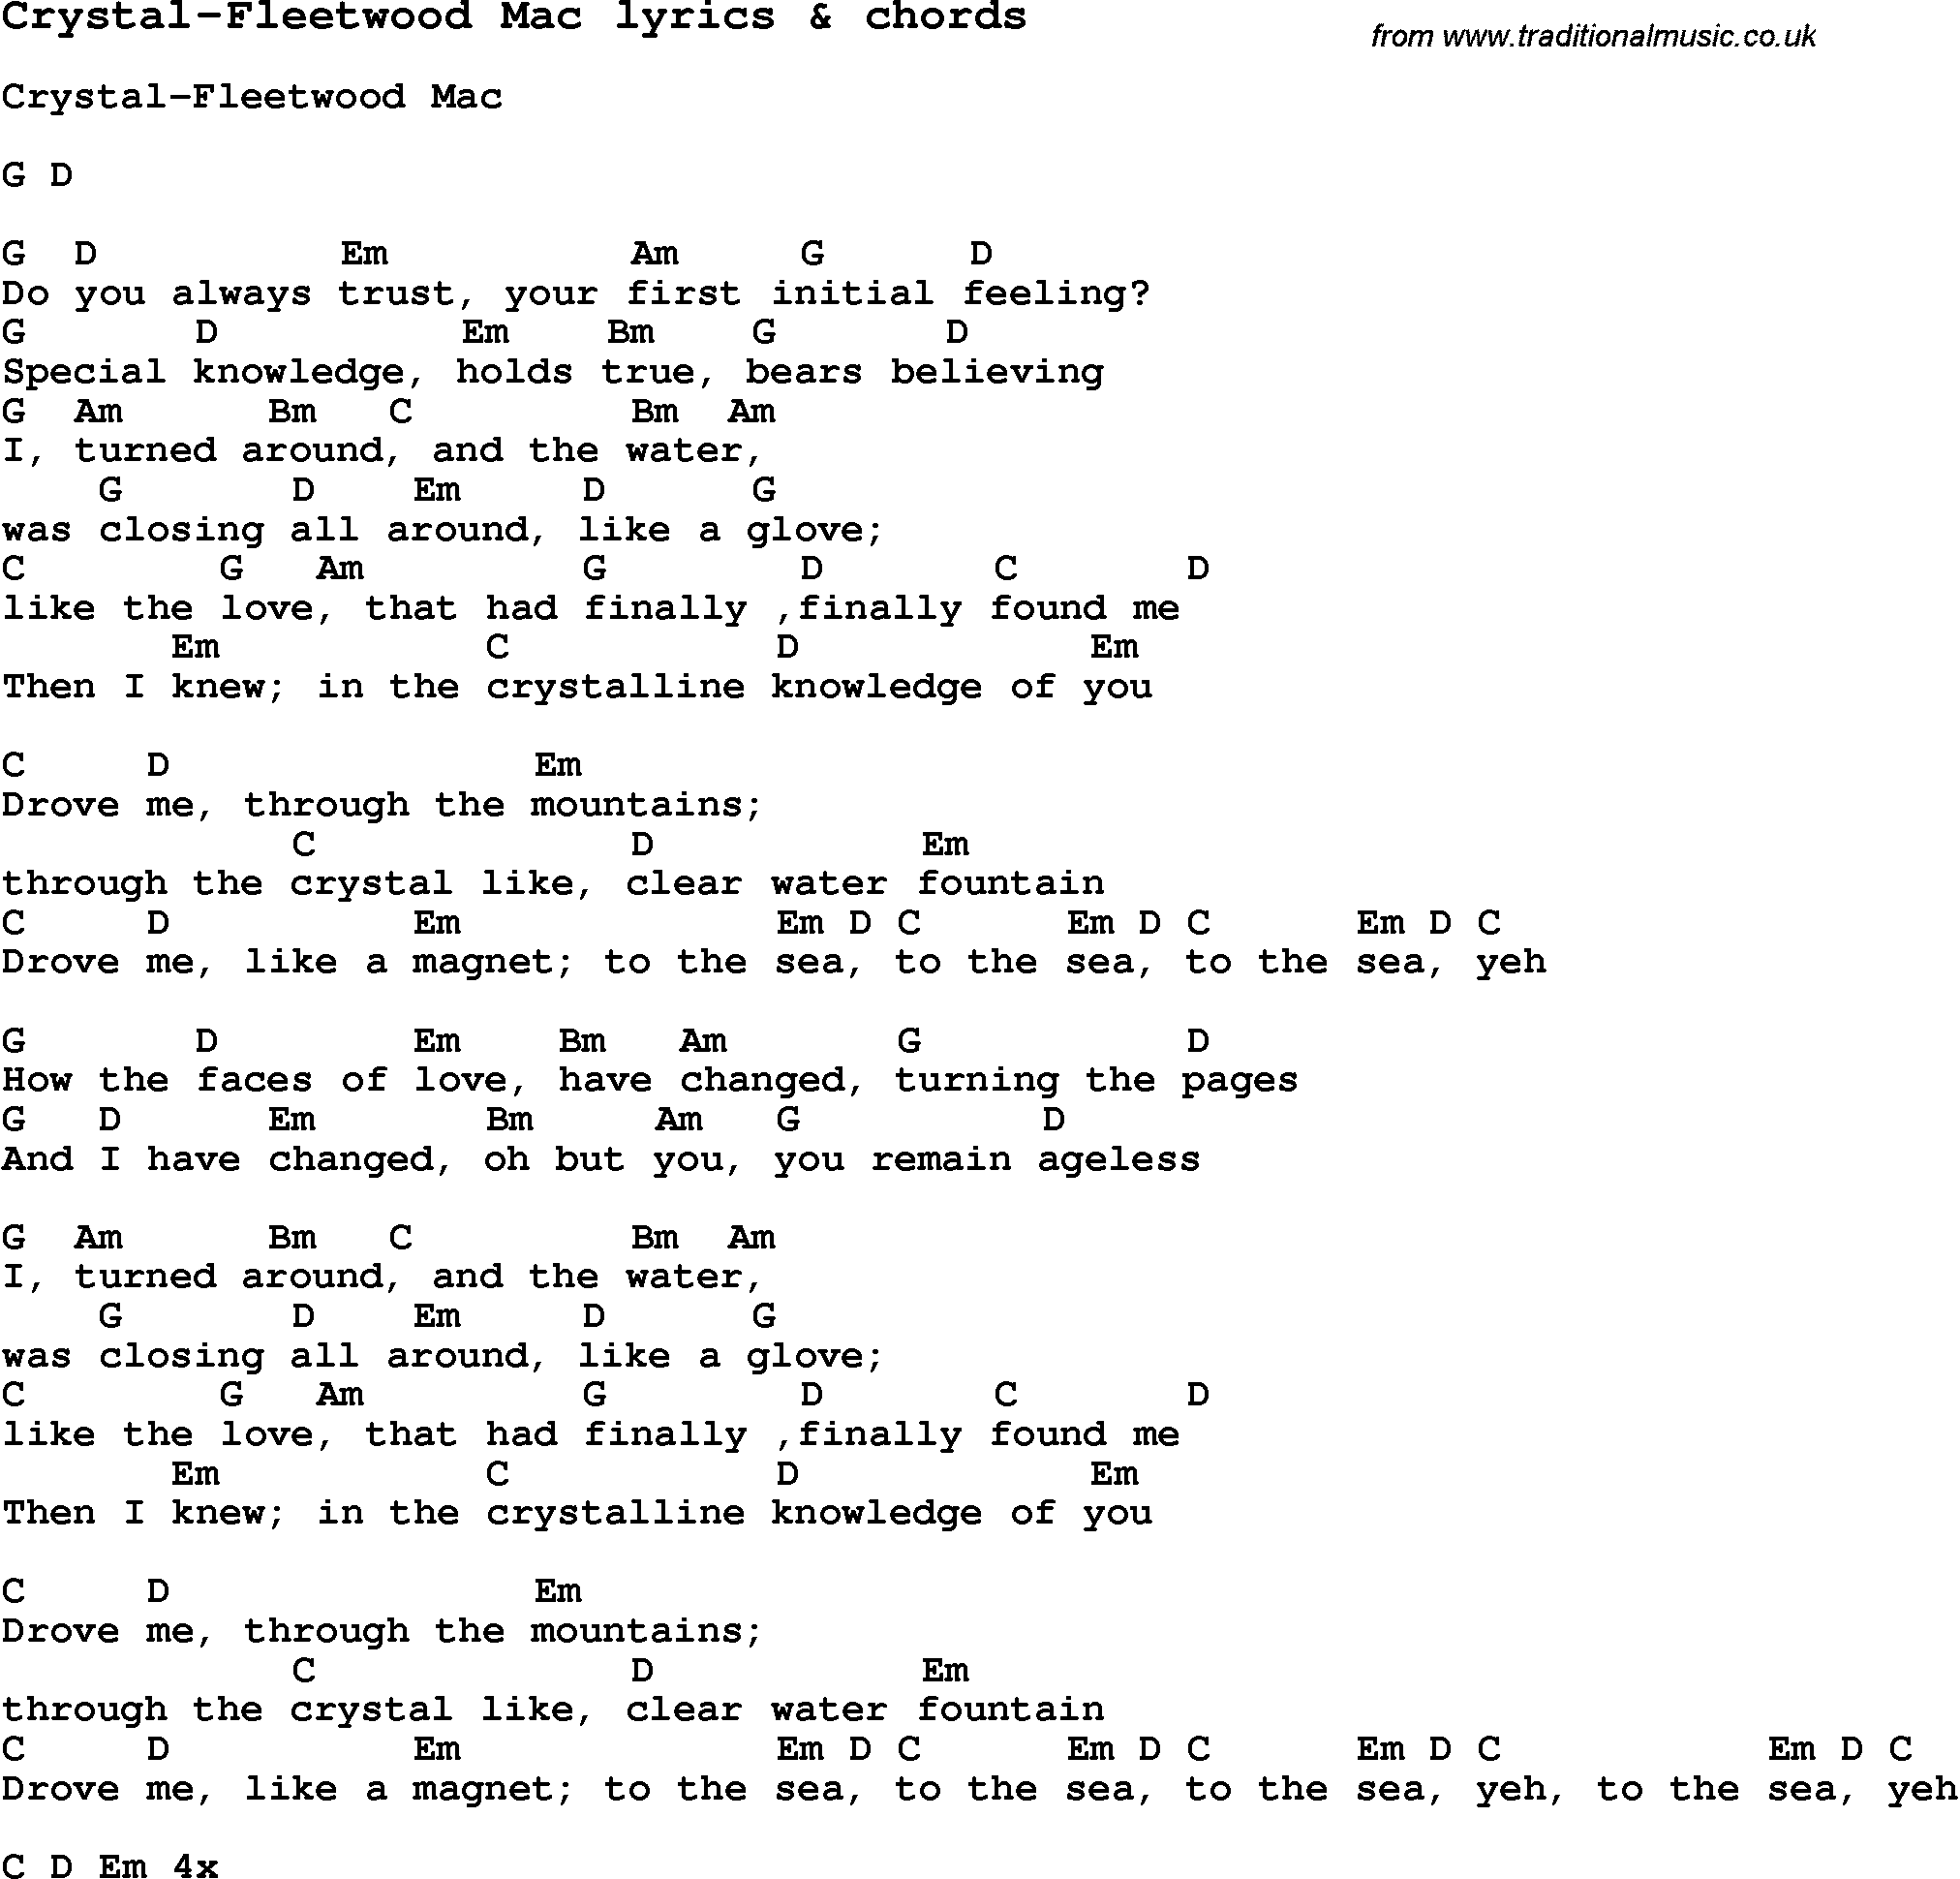 Love Song Lyrics for: Crystal-Fleetwood Mac with chords for Ukulele, Guitar Banjo etc.